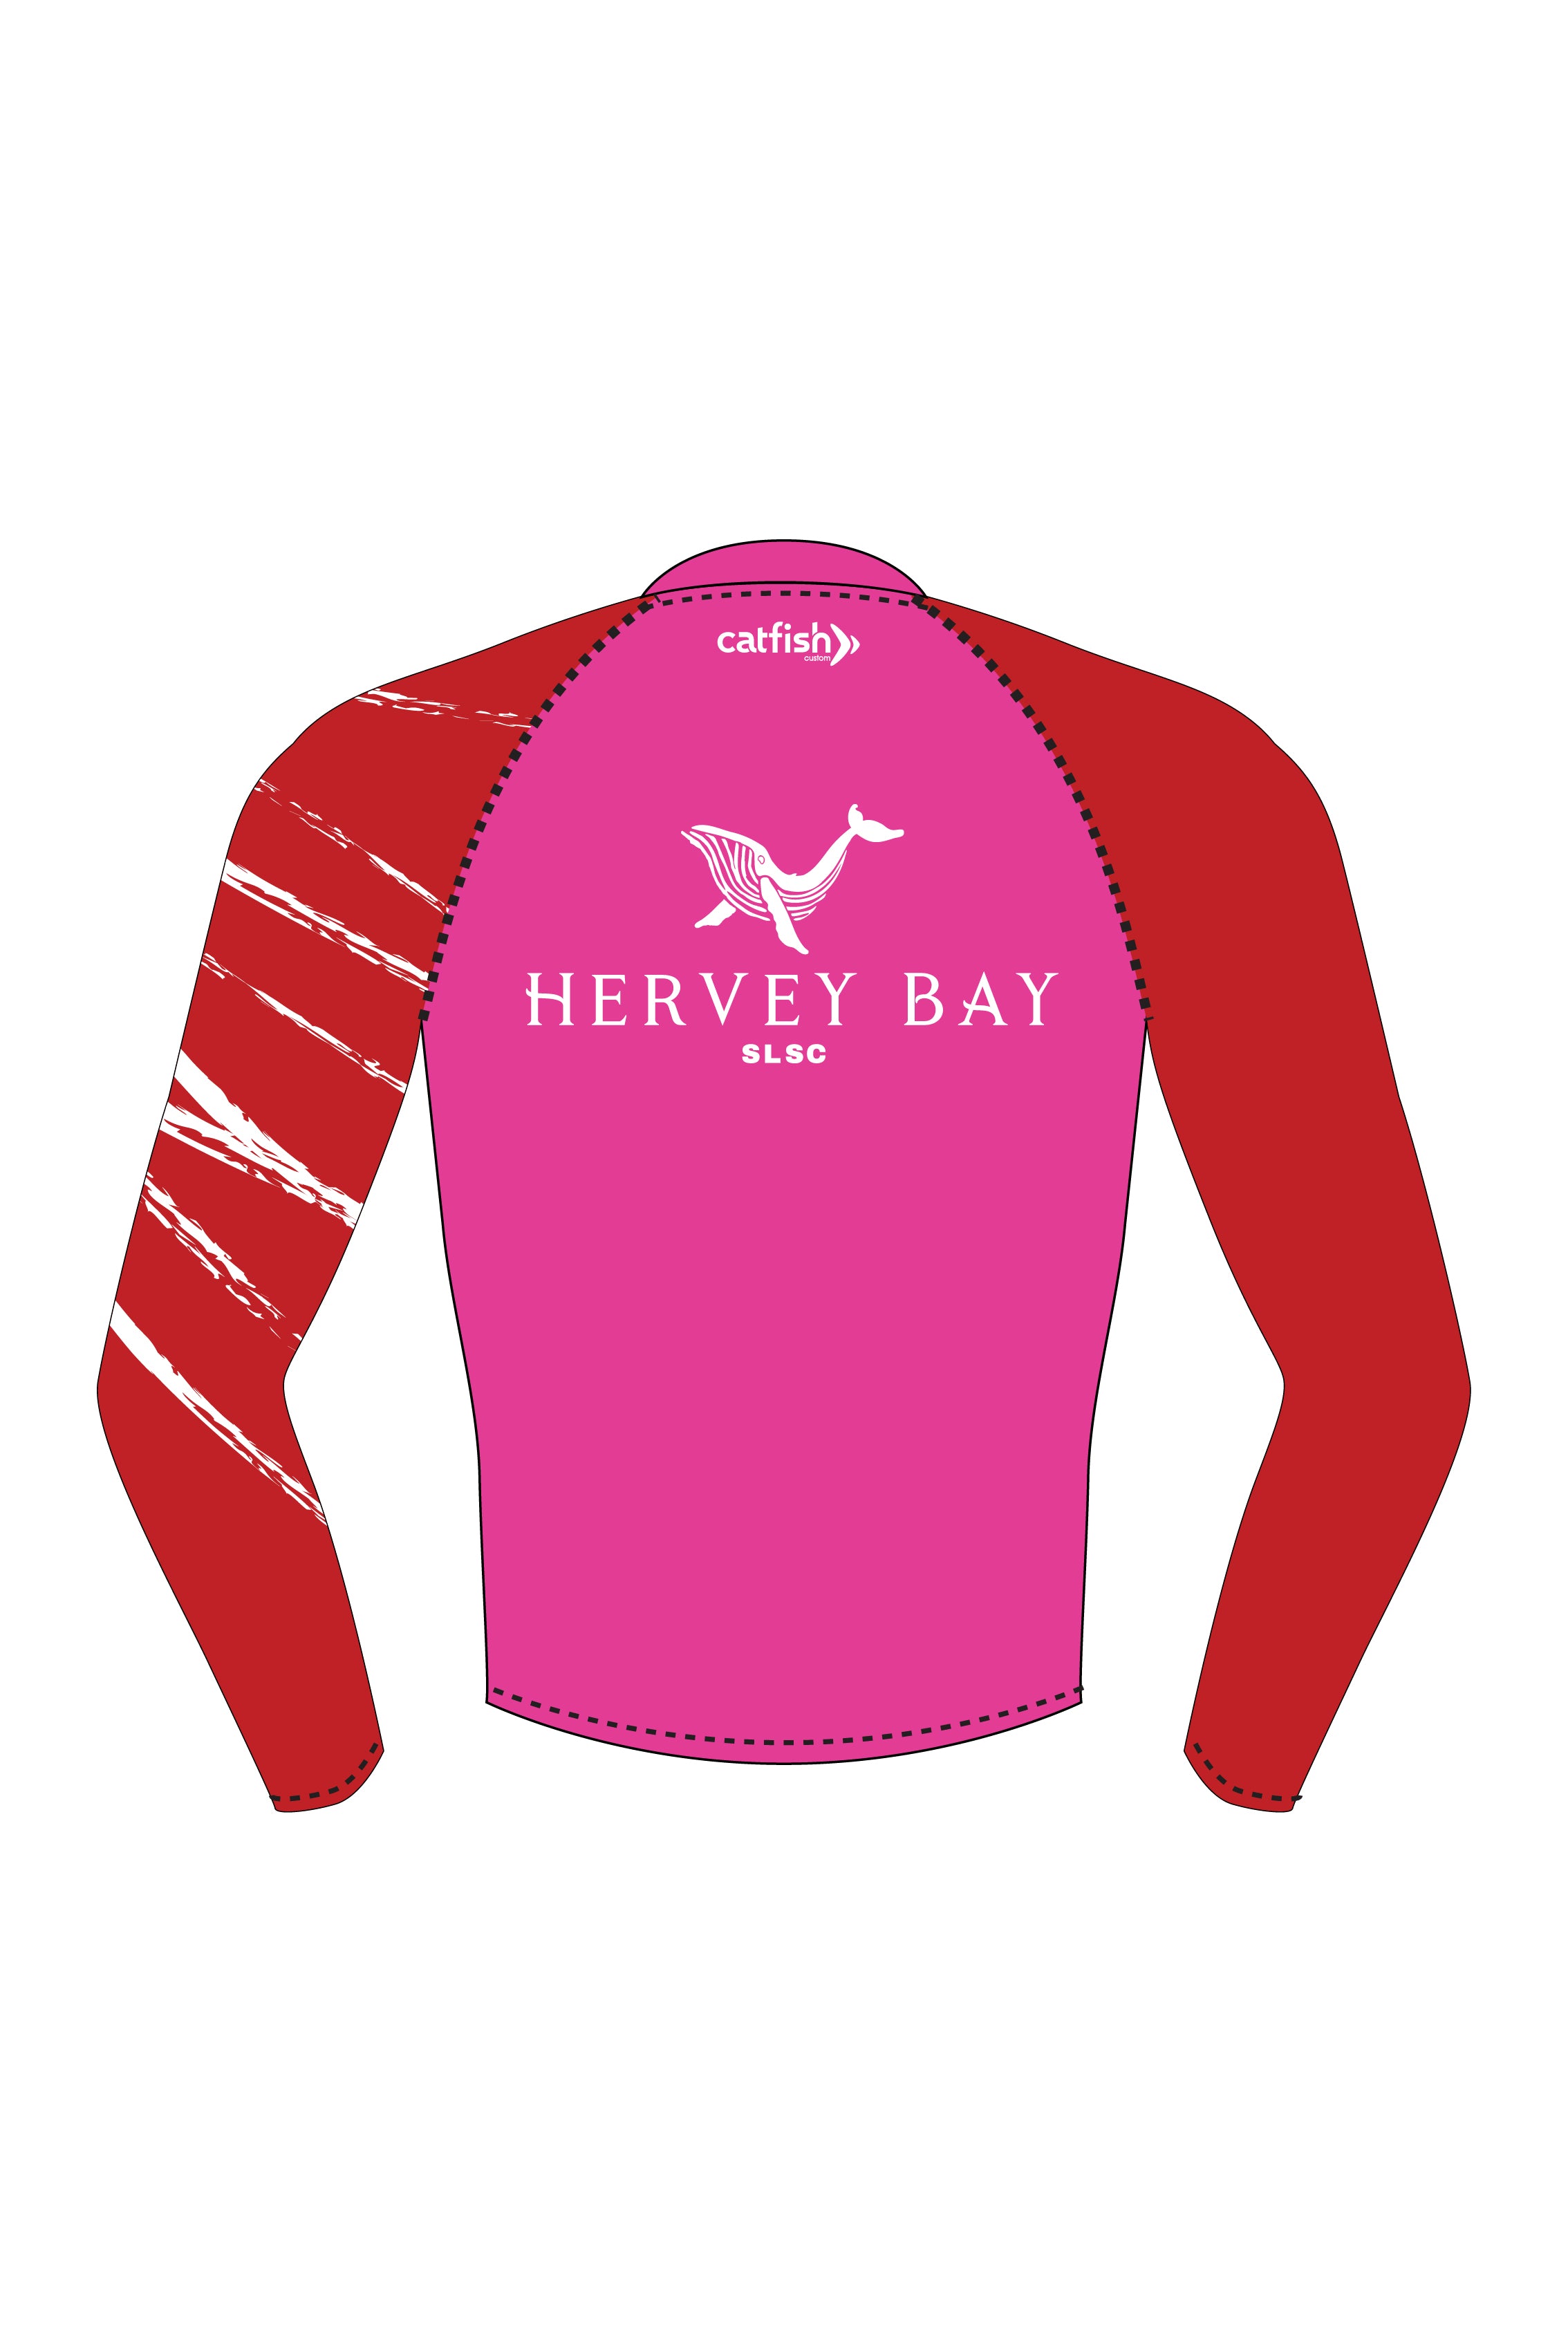 Hervey Bay LS Pink Hi-Vis - Kid's